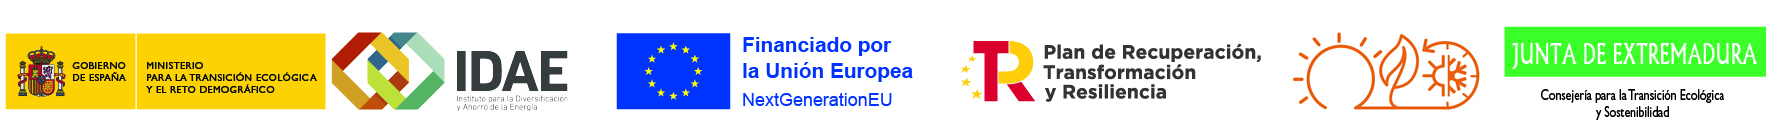 LOGO MINISTERIO DEL INTERIOR - IDAE UNION EUROPEA - PLAN DE RECUPERACION - JUNT DE EXTREMADURA